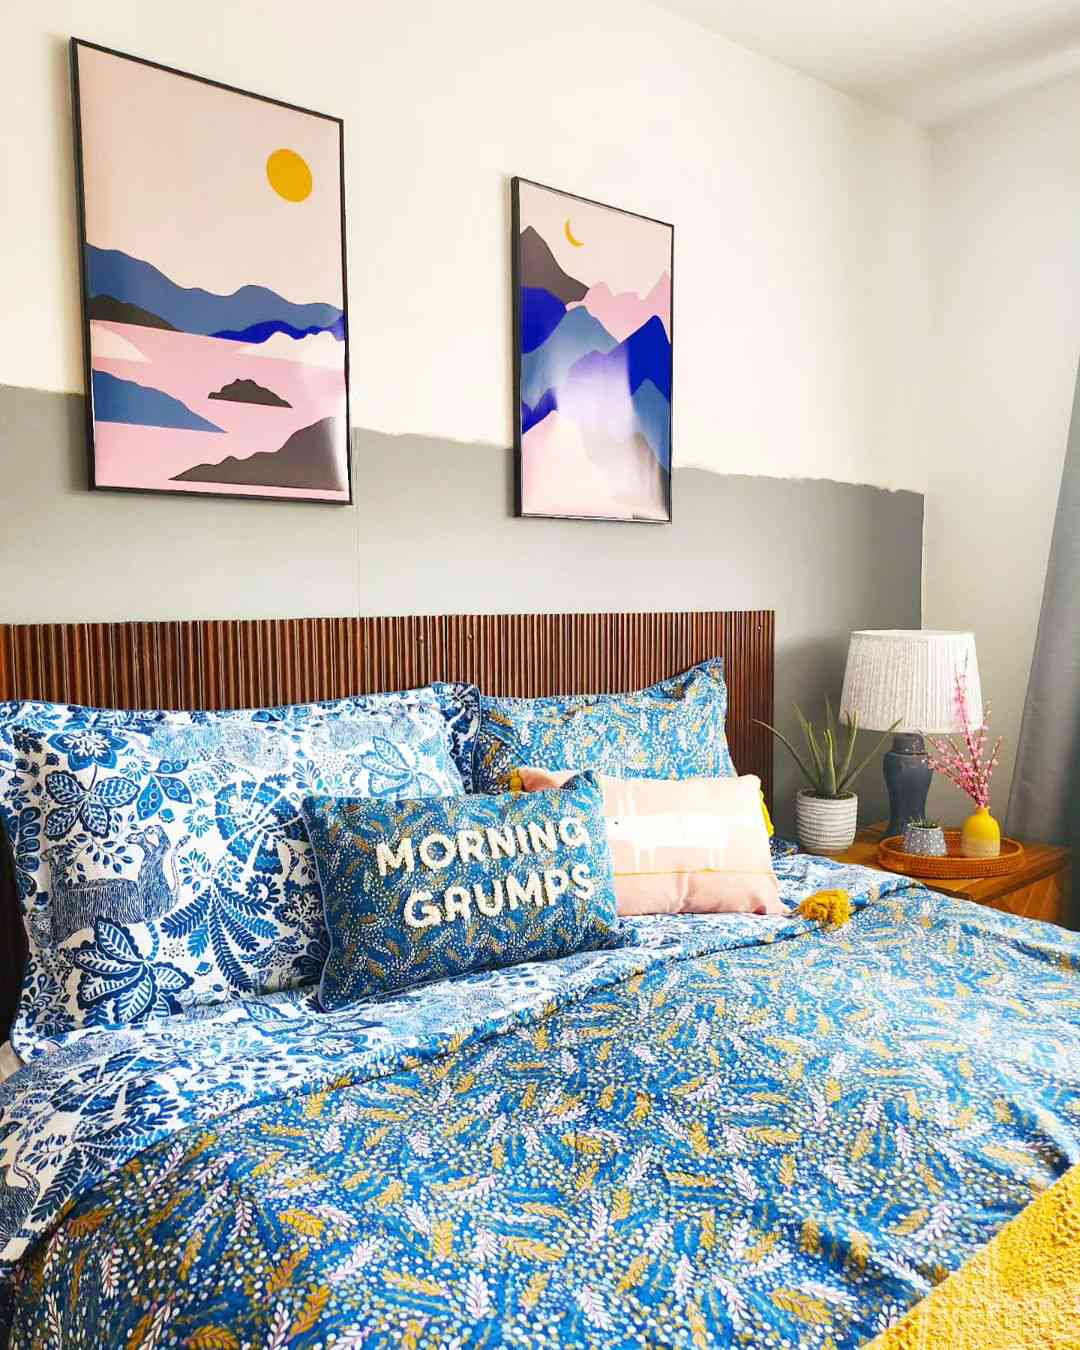 Roupa de cama azul royal com fundo cinza